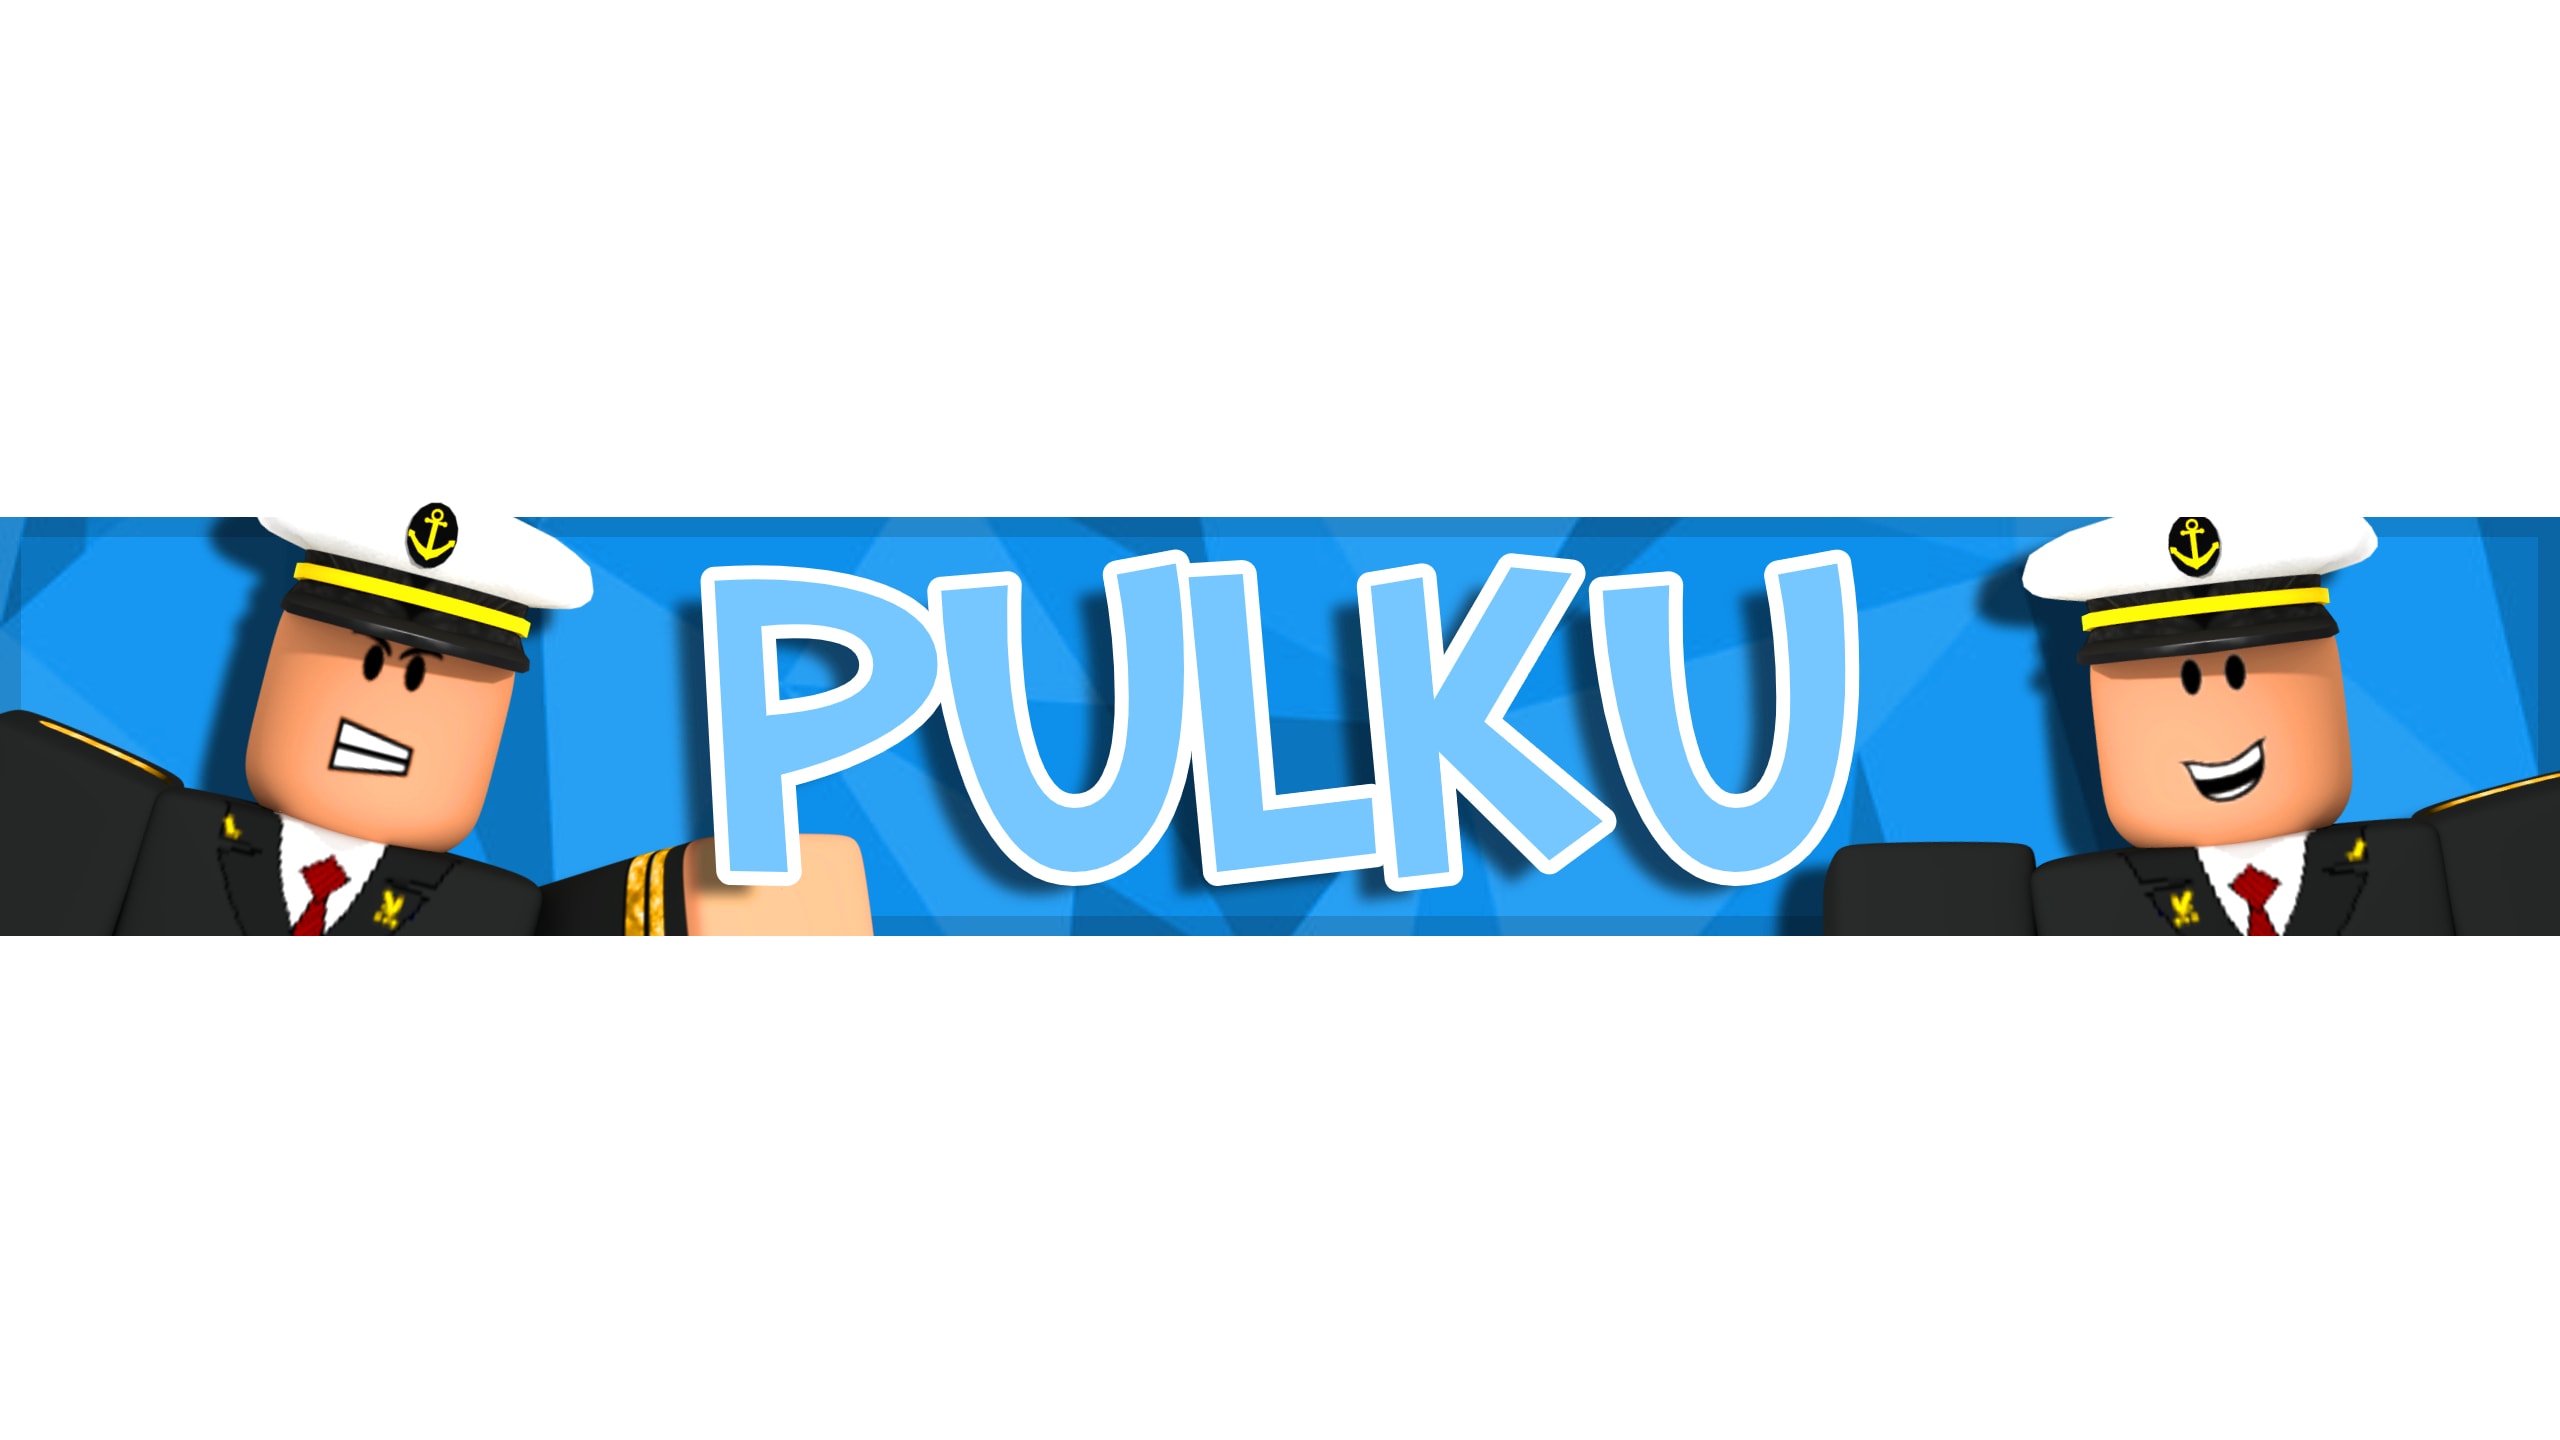 Make You A Custom Gfx Roblox Youtube Banner Or Channel Art By Pulku1 - roblox youtube banner image